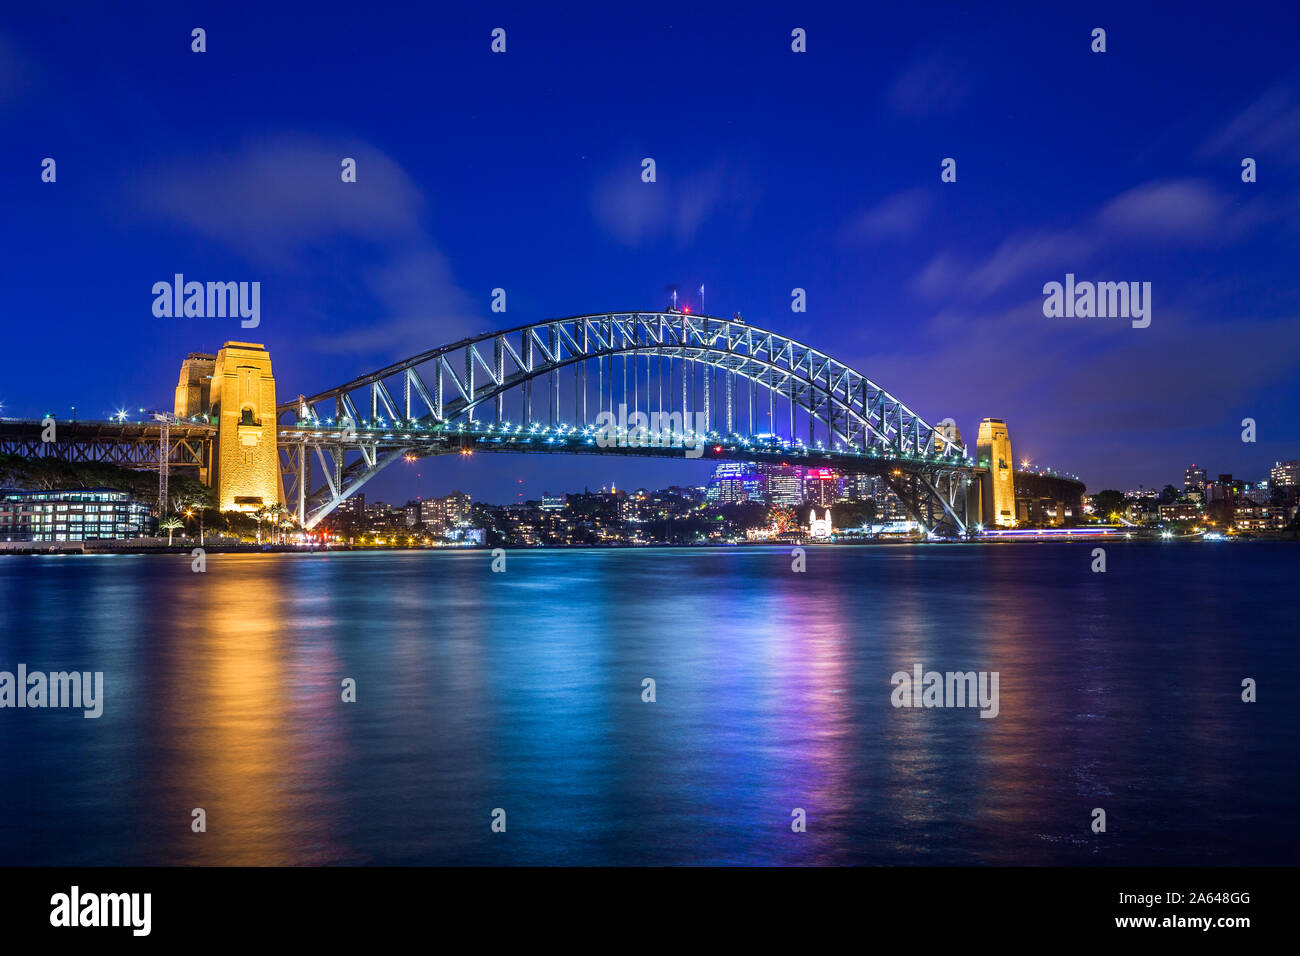 Sydney's iconic Harbour Bridge at night from Circular Quay. Sydney, NSW, Australia Stock Photo